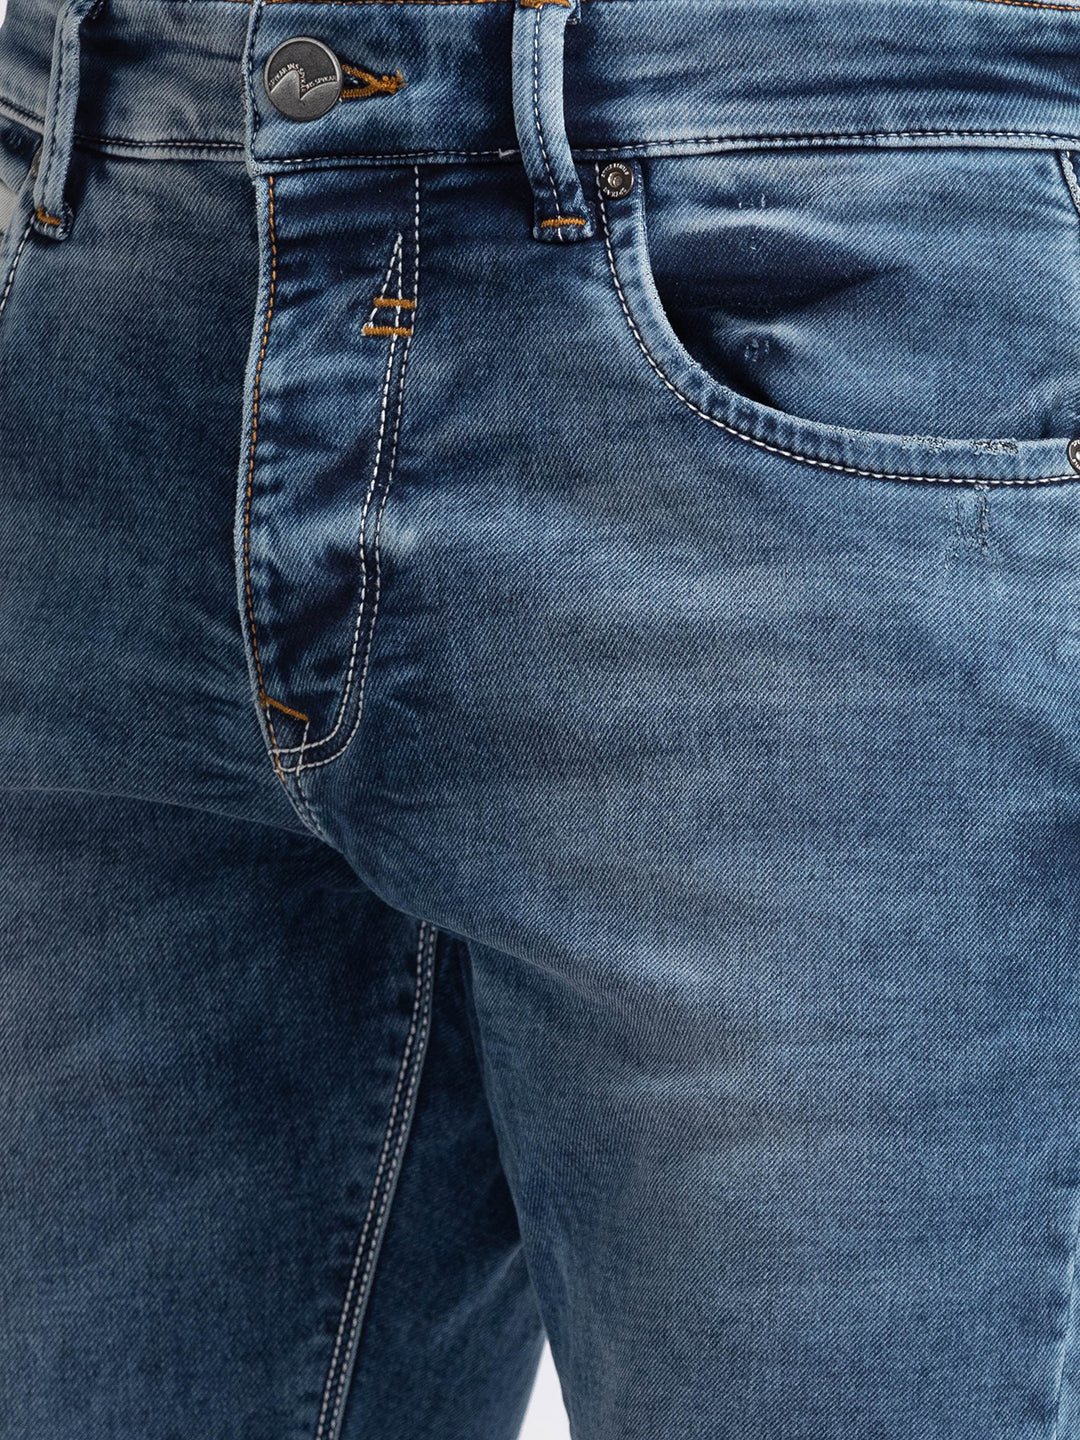 Spykar Light Blue Cotton Comfort Fit Narrow Length Jeans For Men (Trooper)